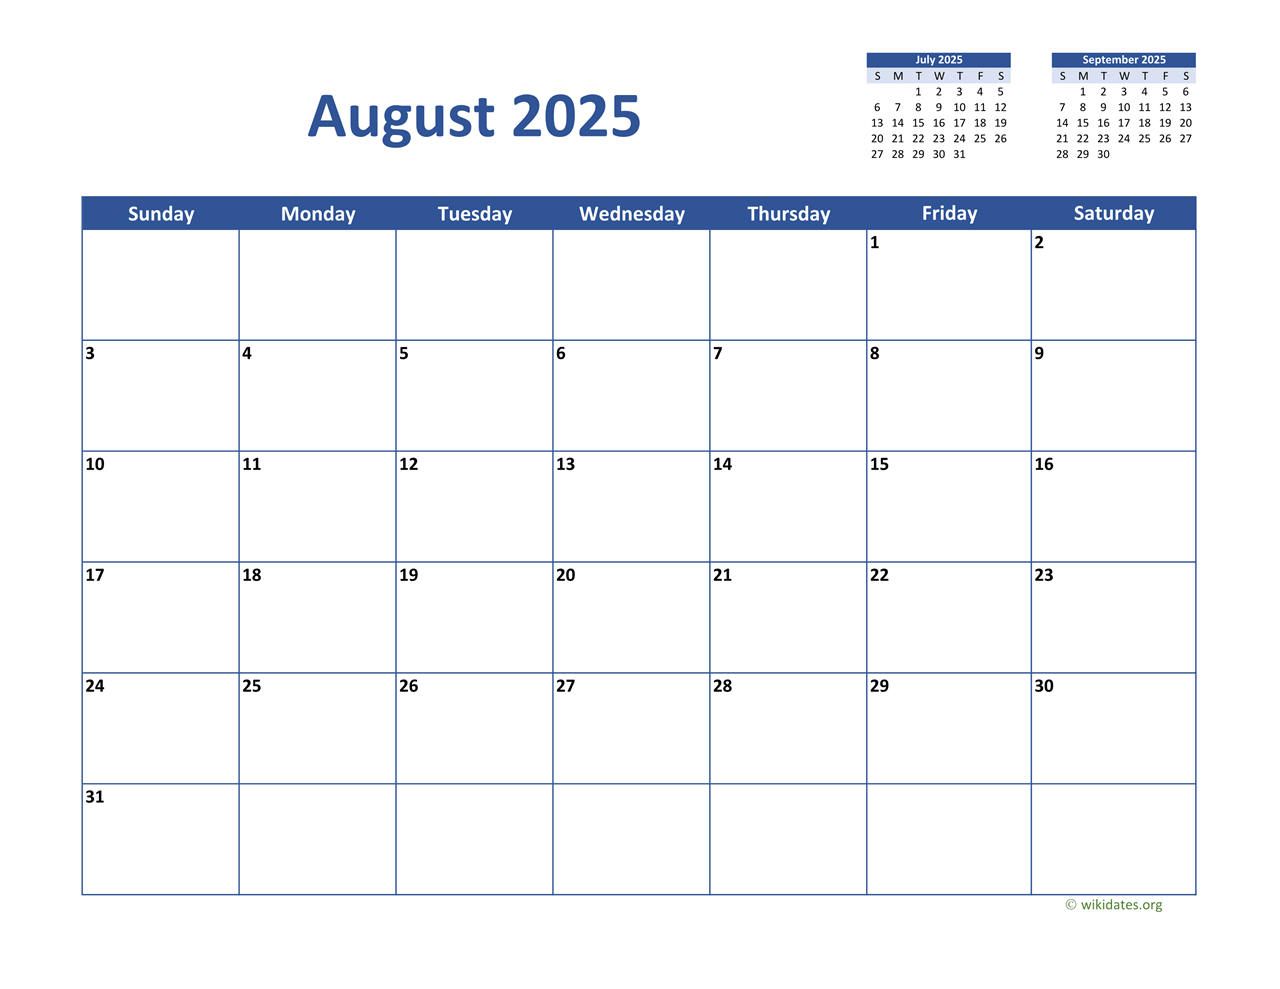 august-2025-calendar-classic-wikidates